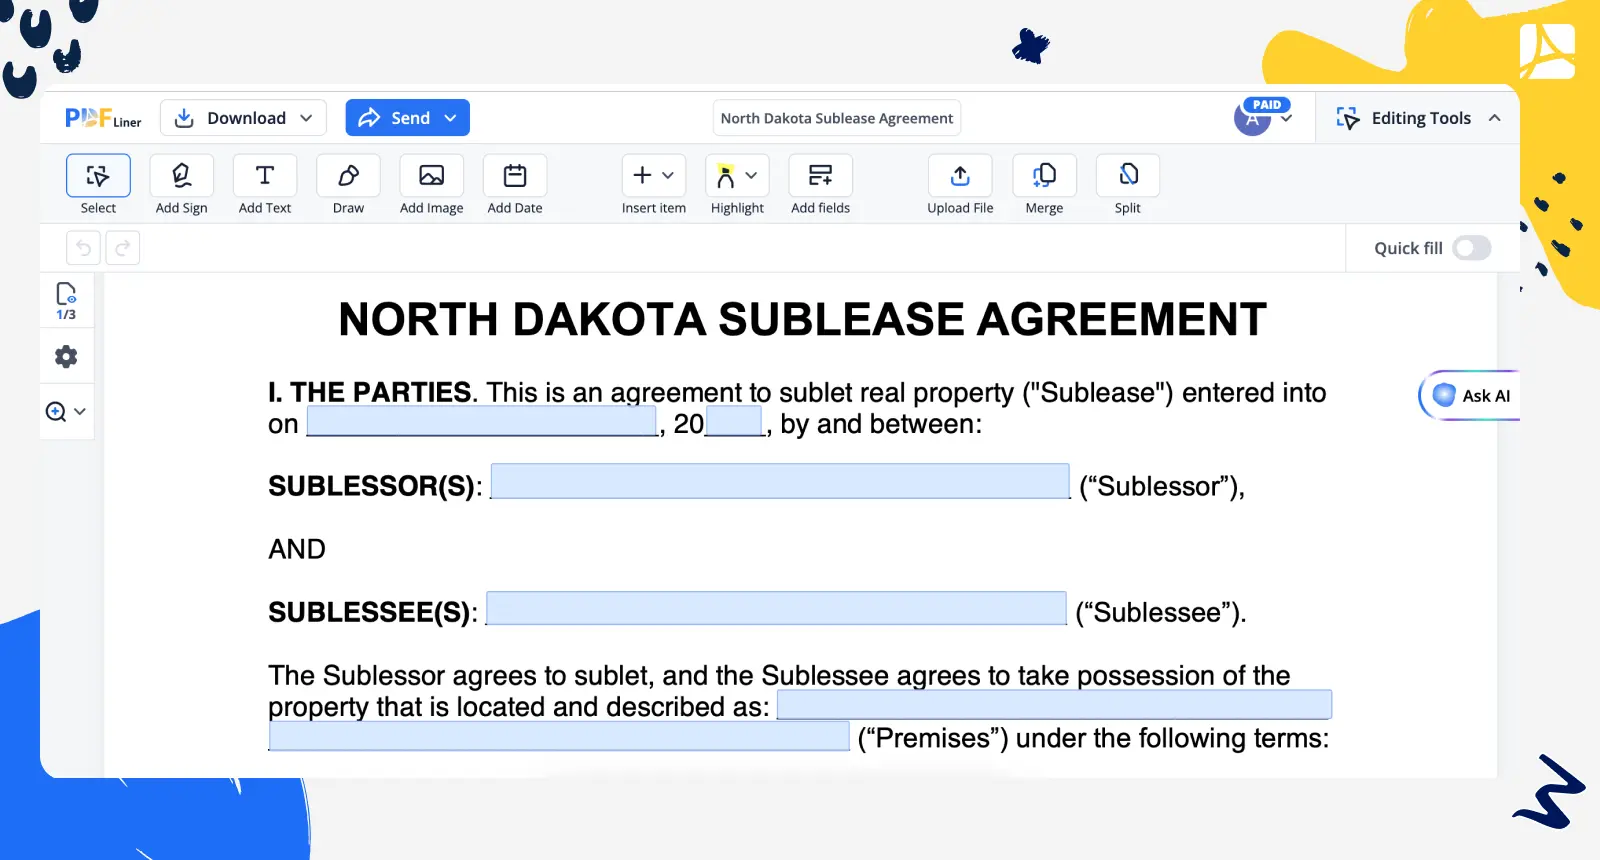 North Dakota Sublease Agreement PDFLiner screenshot